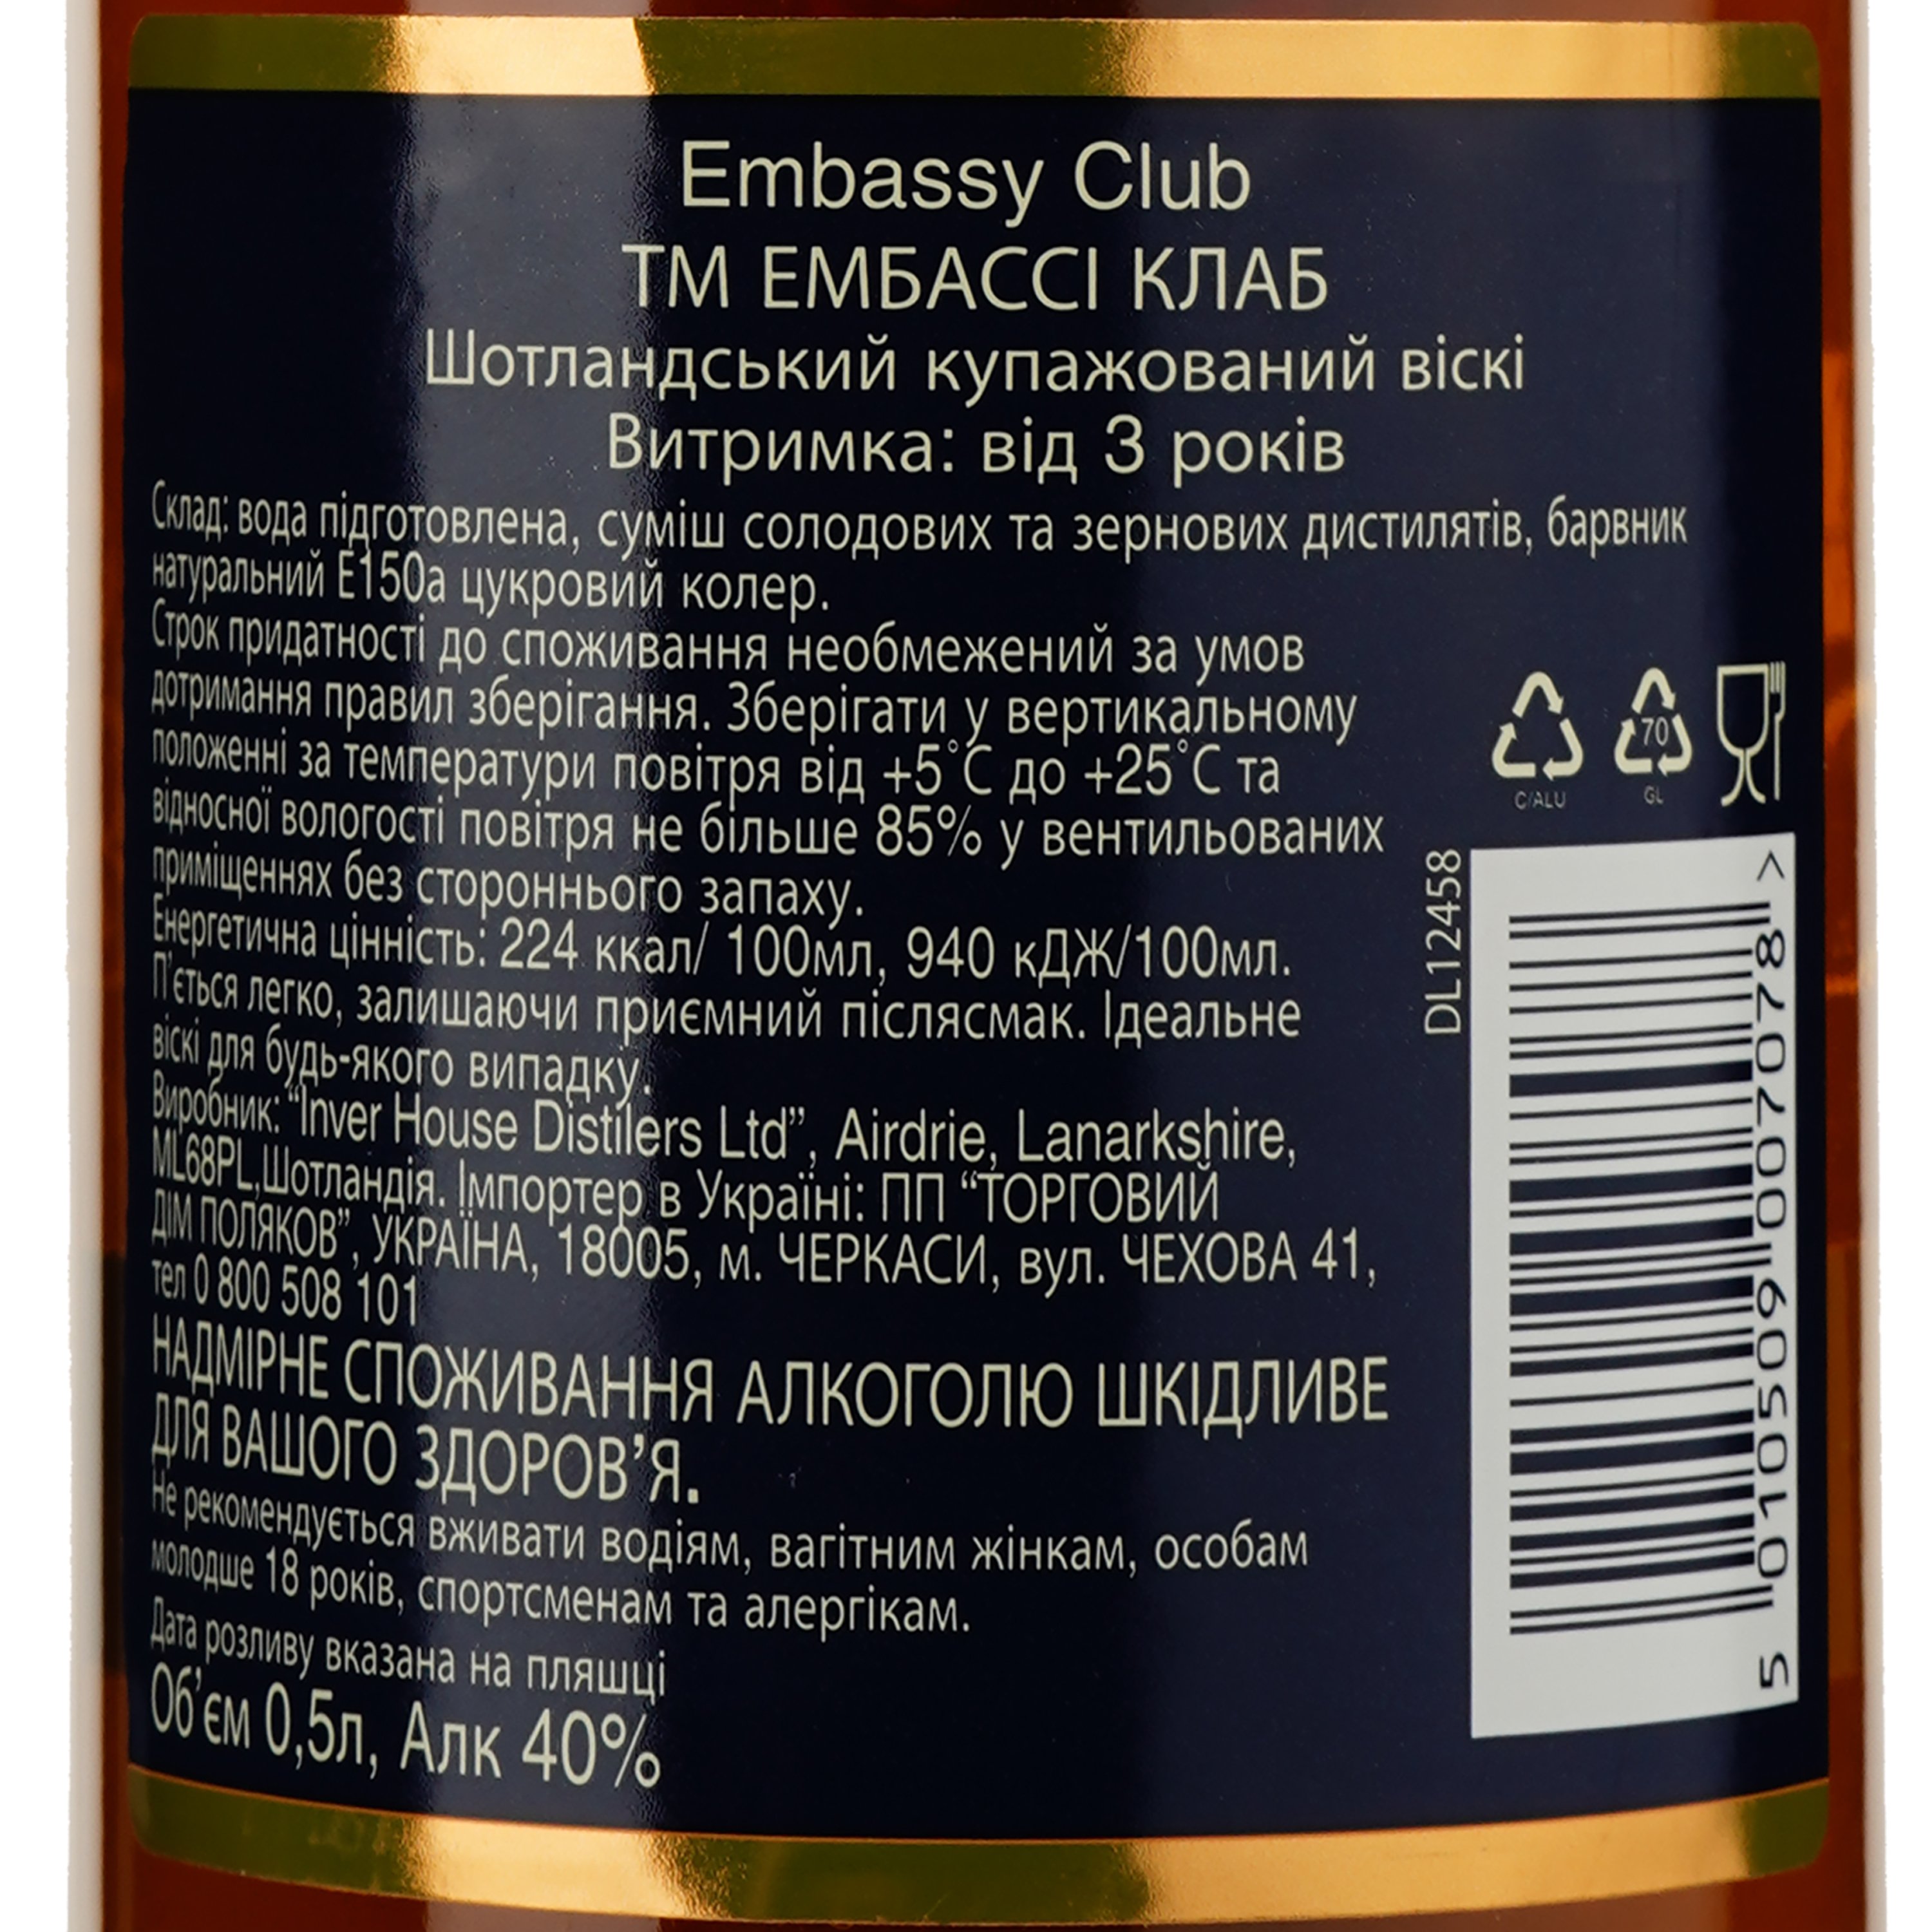 Виски Embassy Club 3 yo Blended Scotch Whisky, 40%, 0,5 л - фото 3